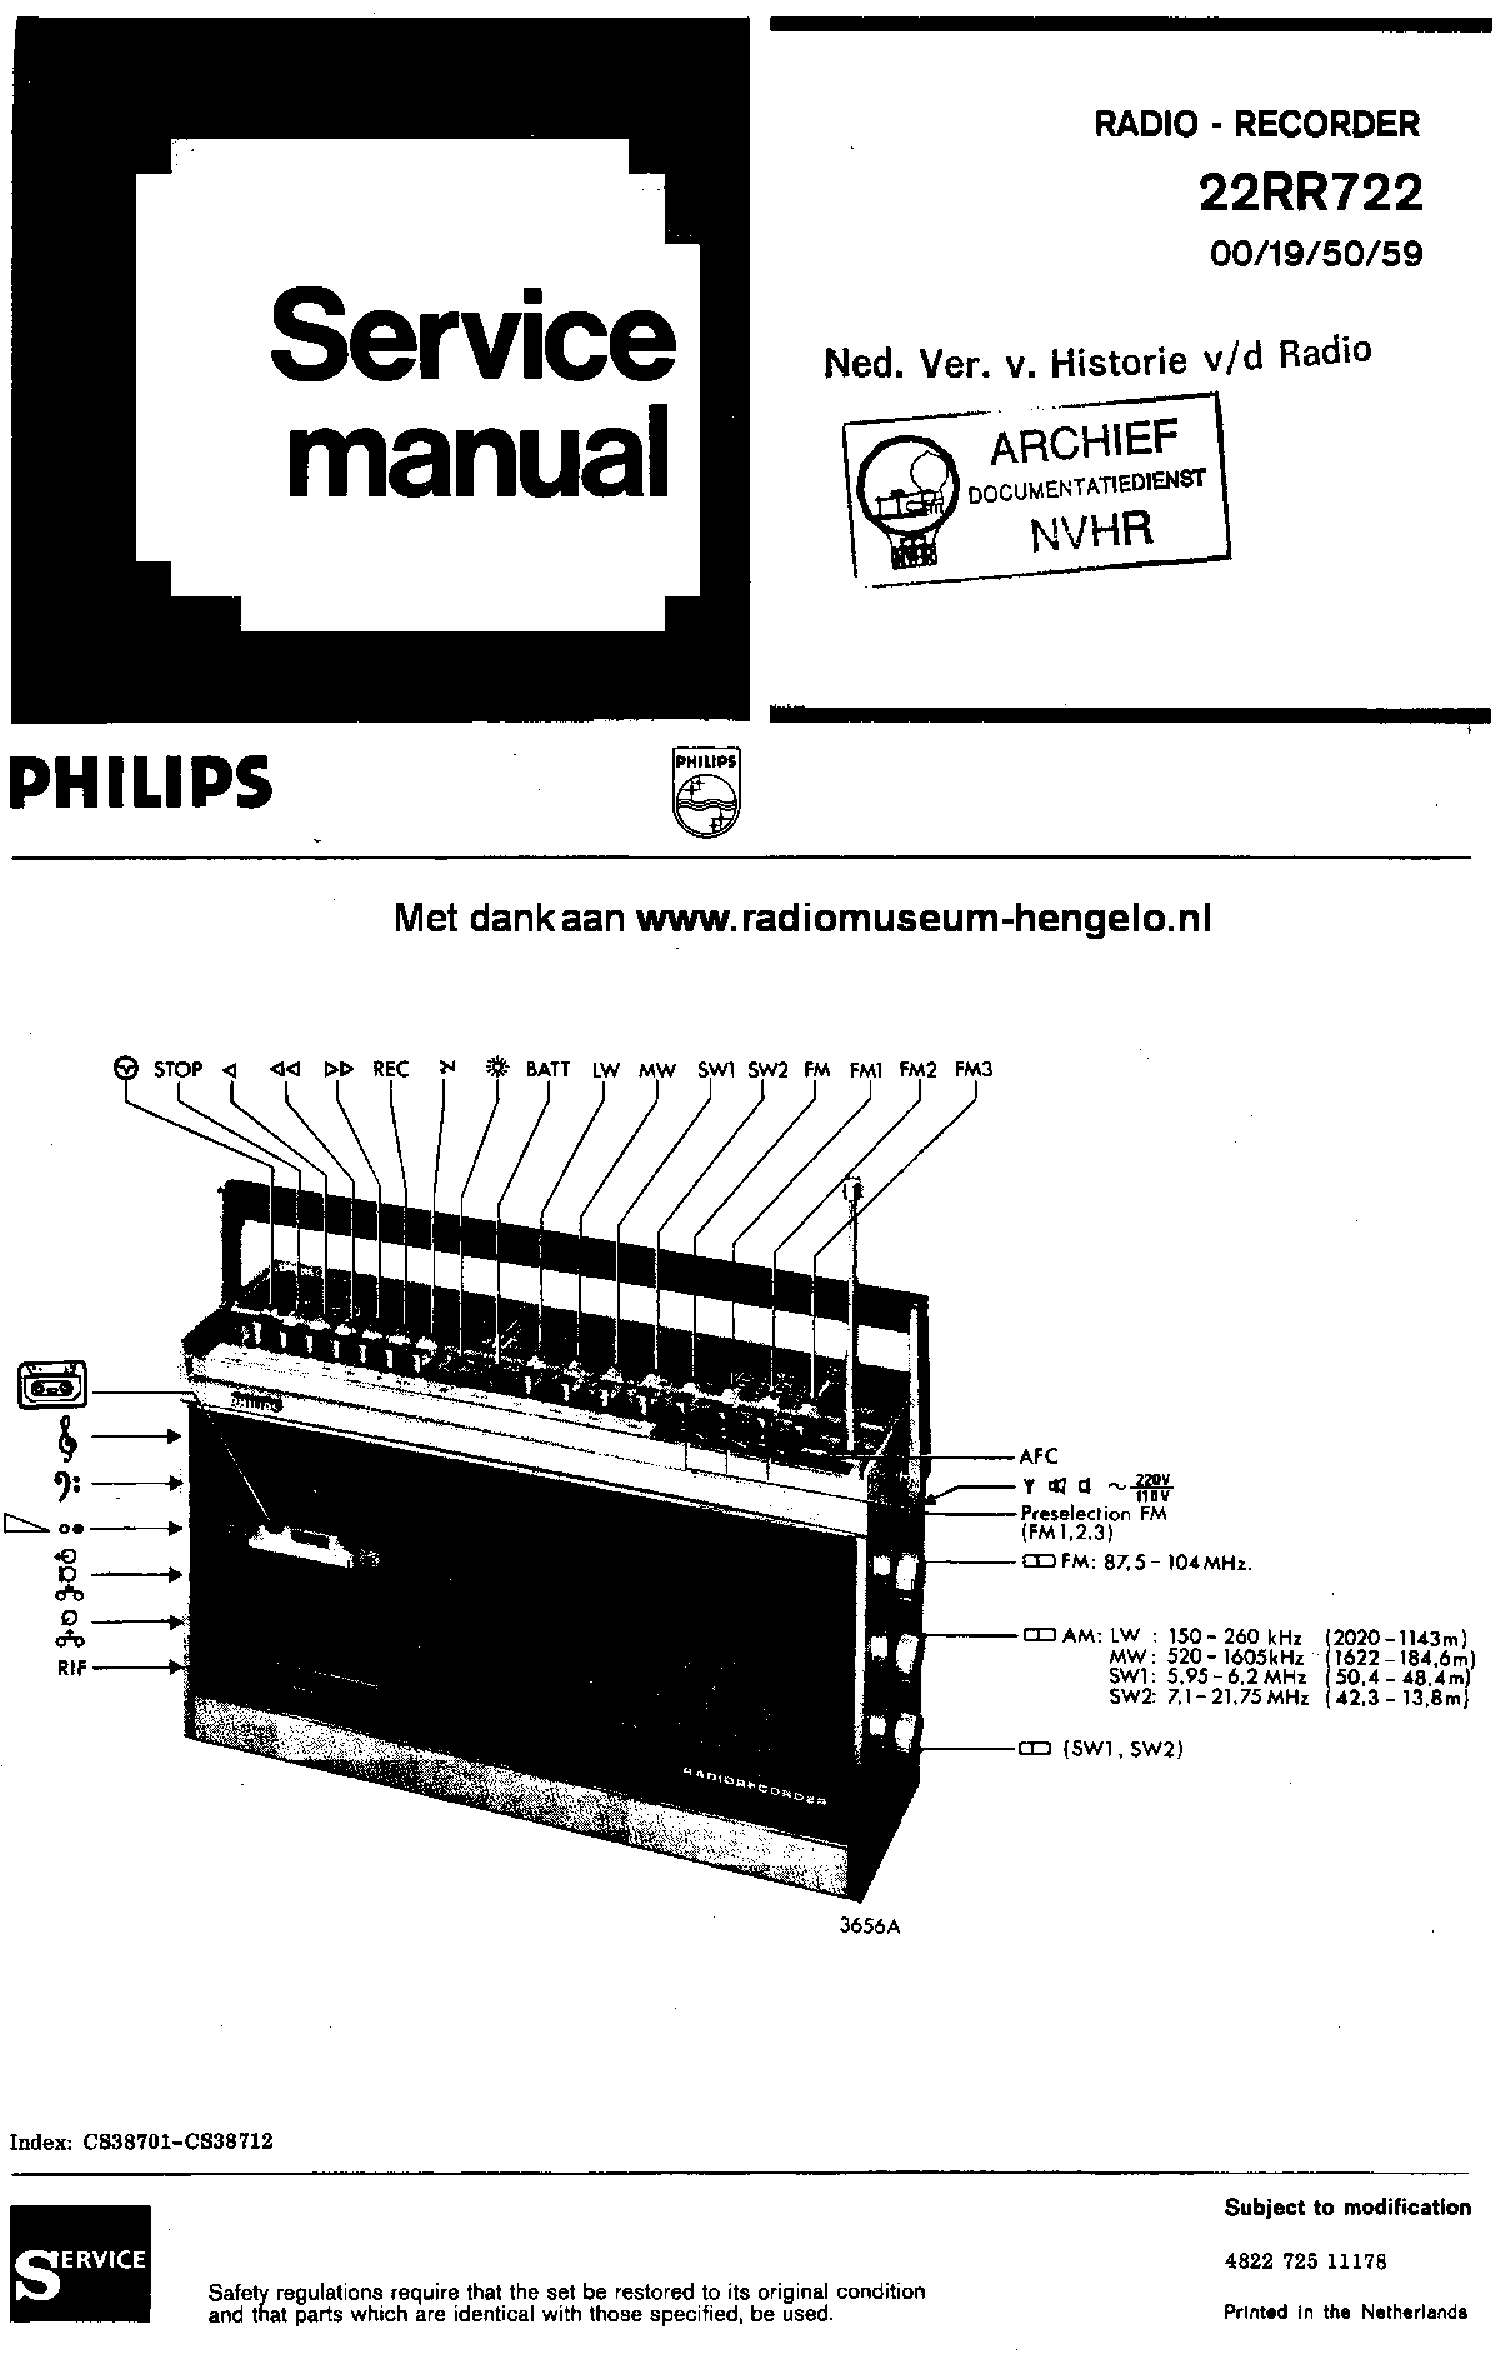 Service Manual-Anleitung für Philips 22 AR 774 